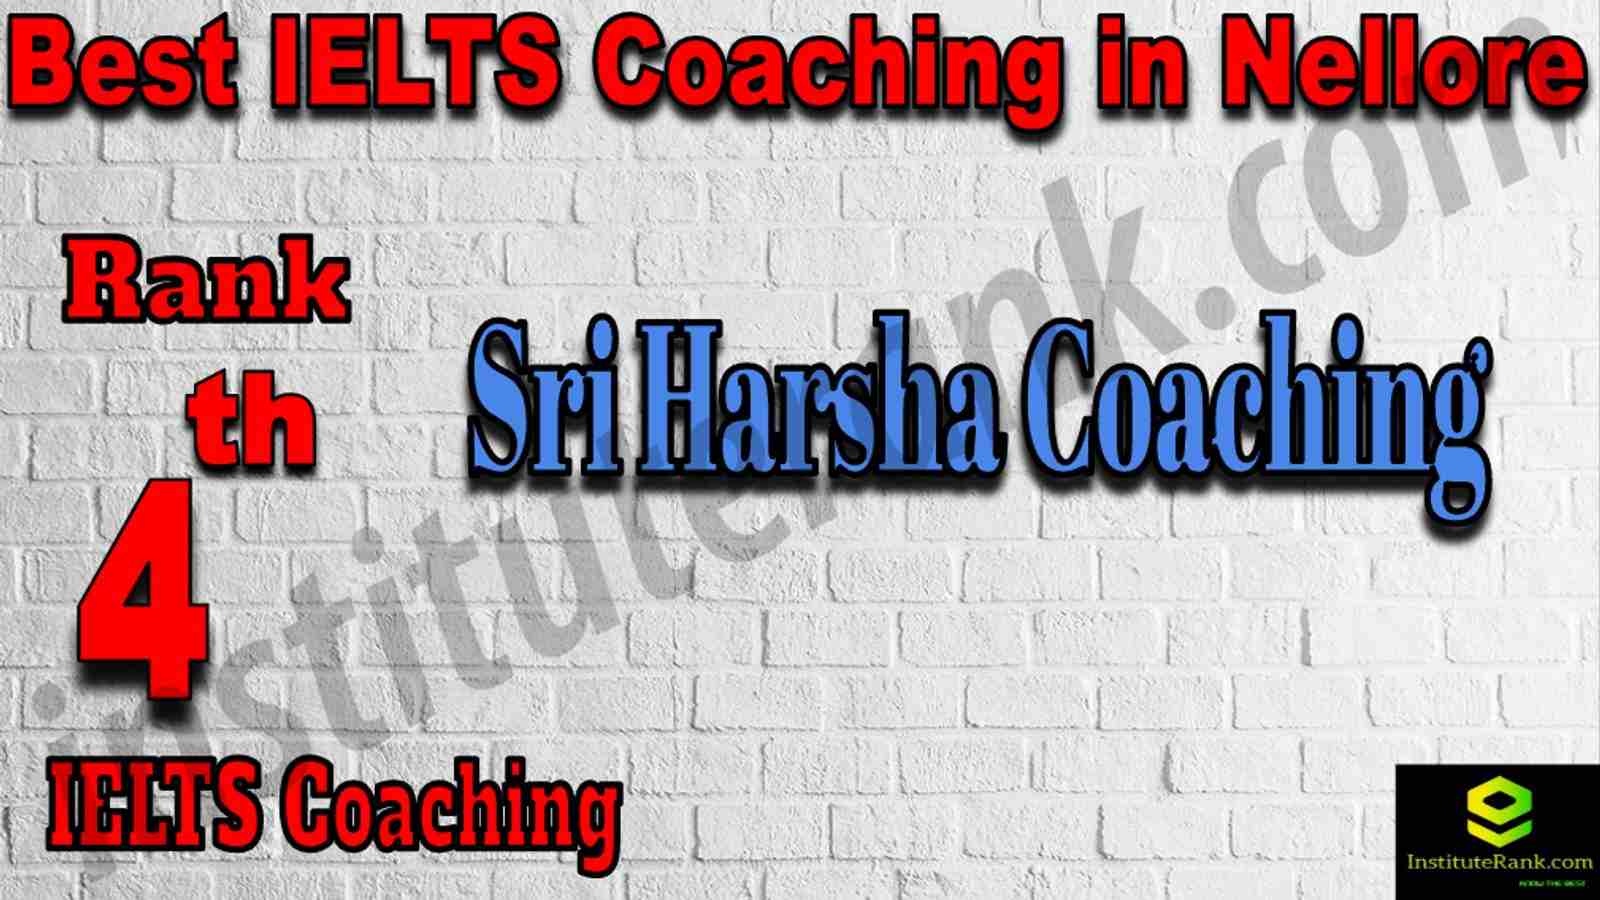 4th Best IELTS Coaching in Nellore